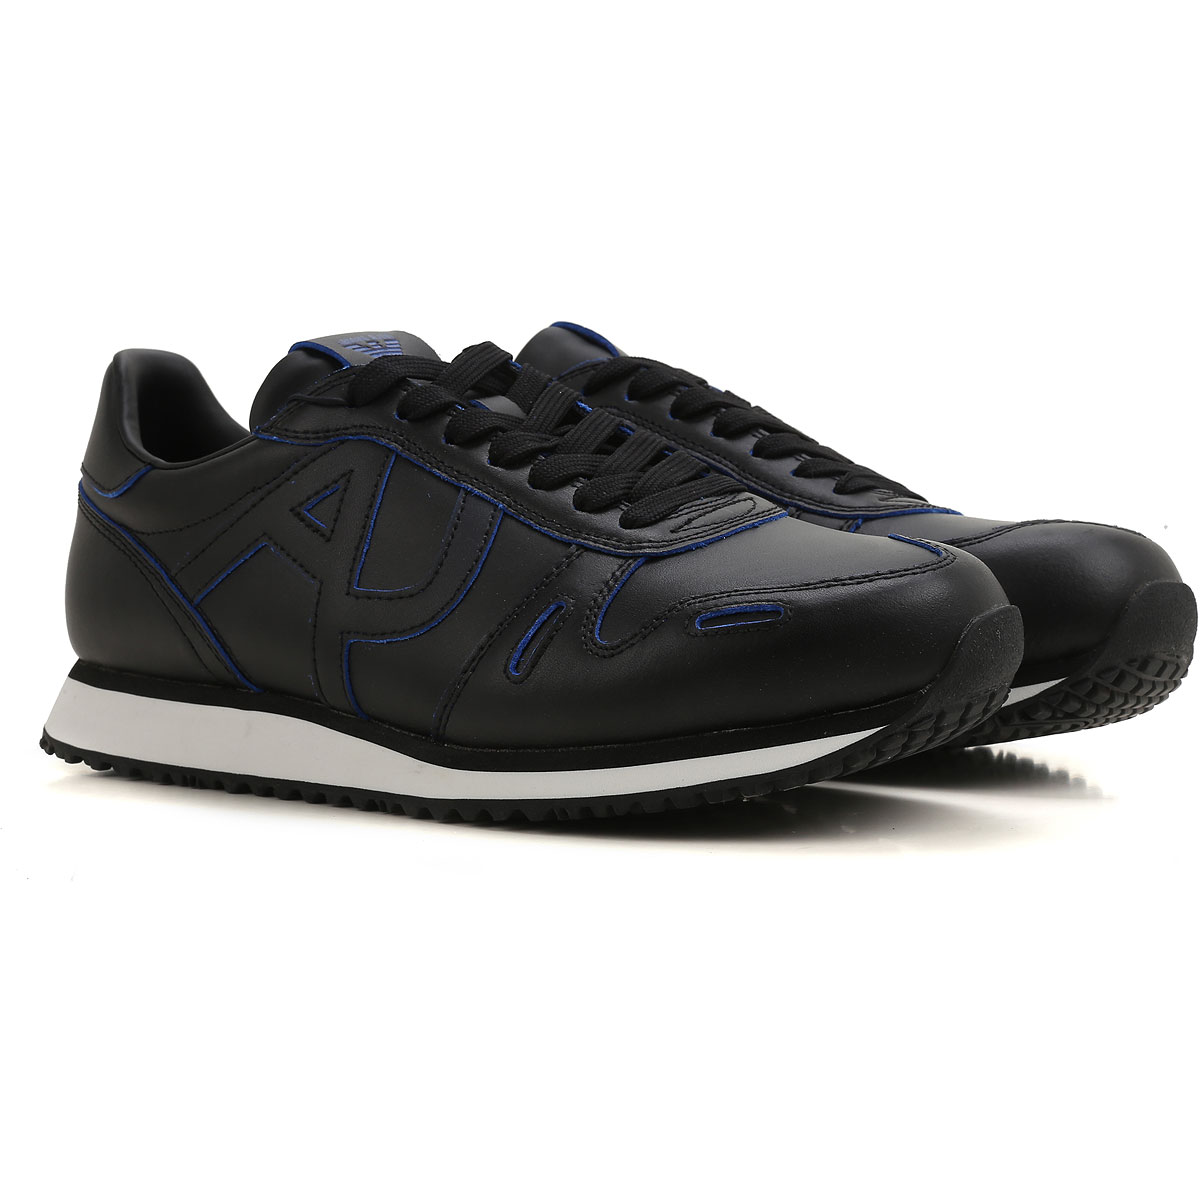 Mens Shoes Emporio Armani, Style code: 935032-7a422-00020